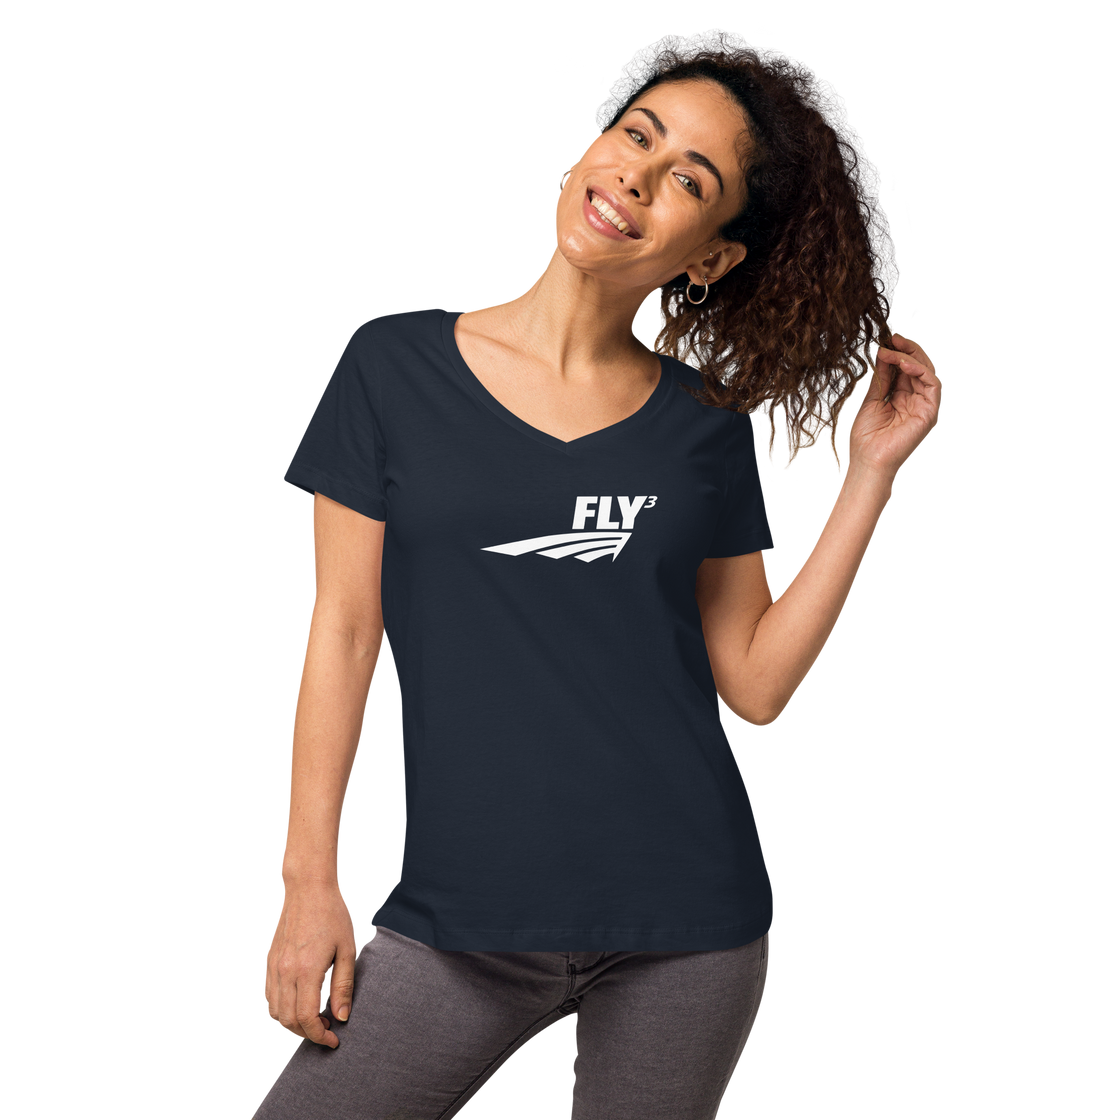 FLY³ Women’s fitted v-neck t-shirt | Flycube